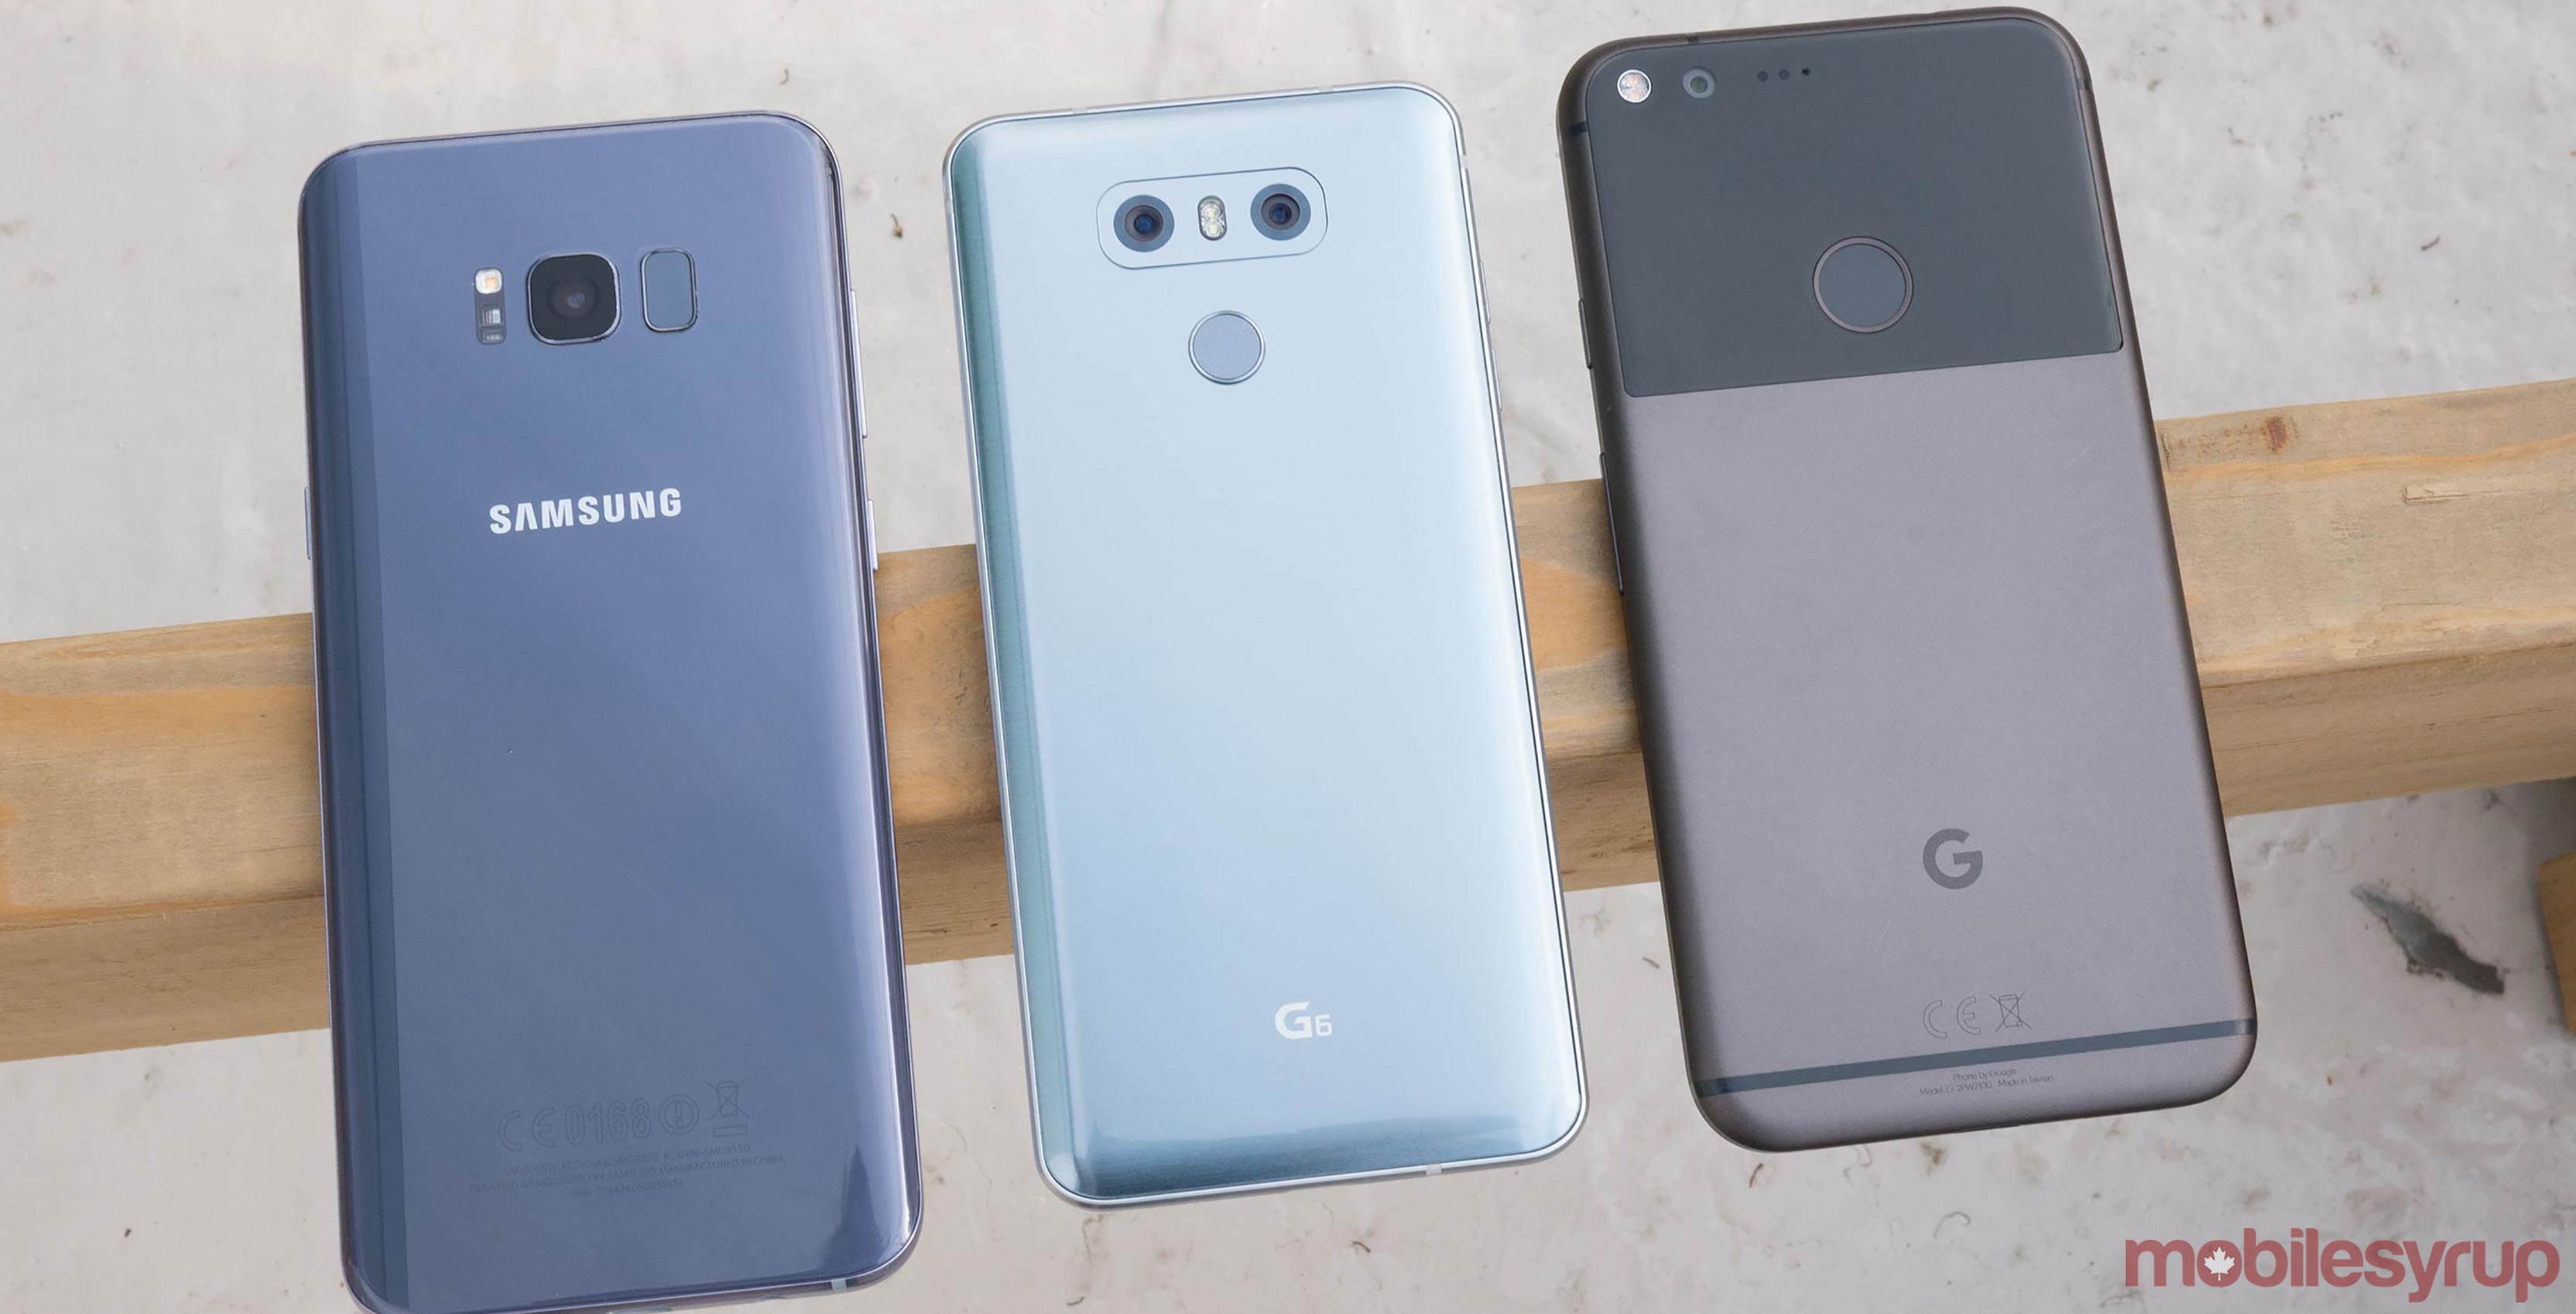 Galaxy S8, LG G6, Google Pixel